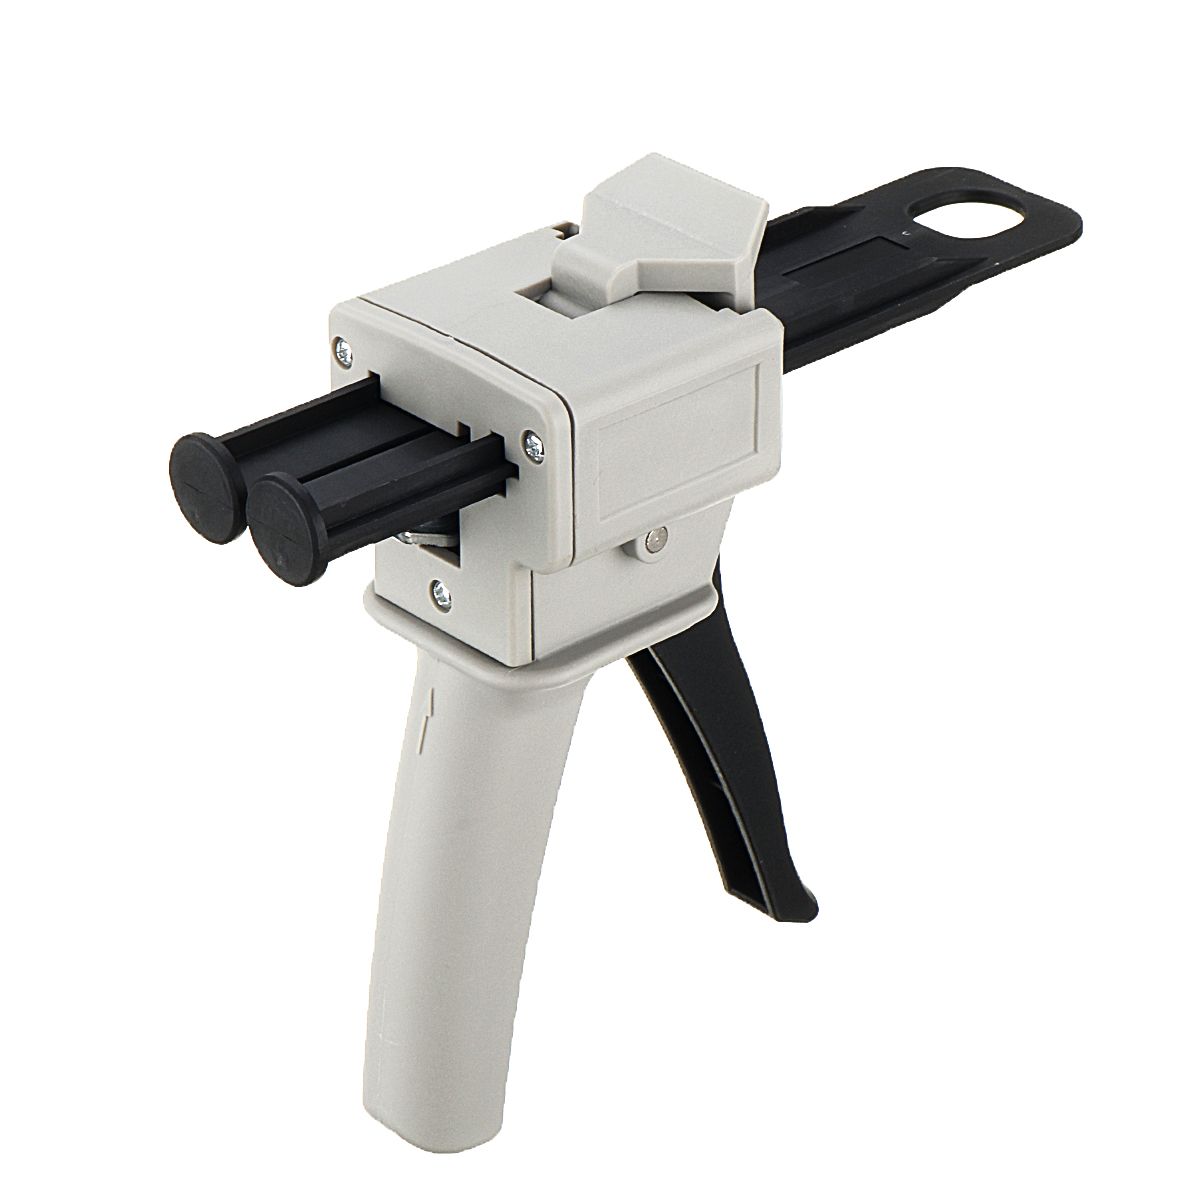 50ml-AB-Glue-Applicator-Dispenser-Impression-Mixing-Dispensing-Handle-Spread-Applicator-Glue-Nozzles-1500150